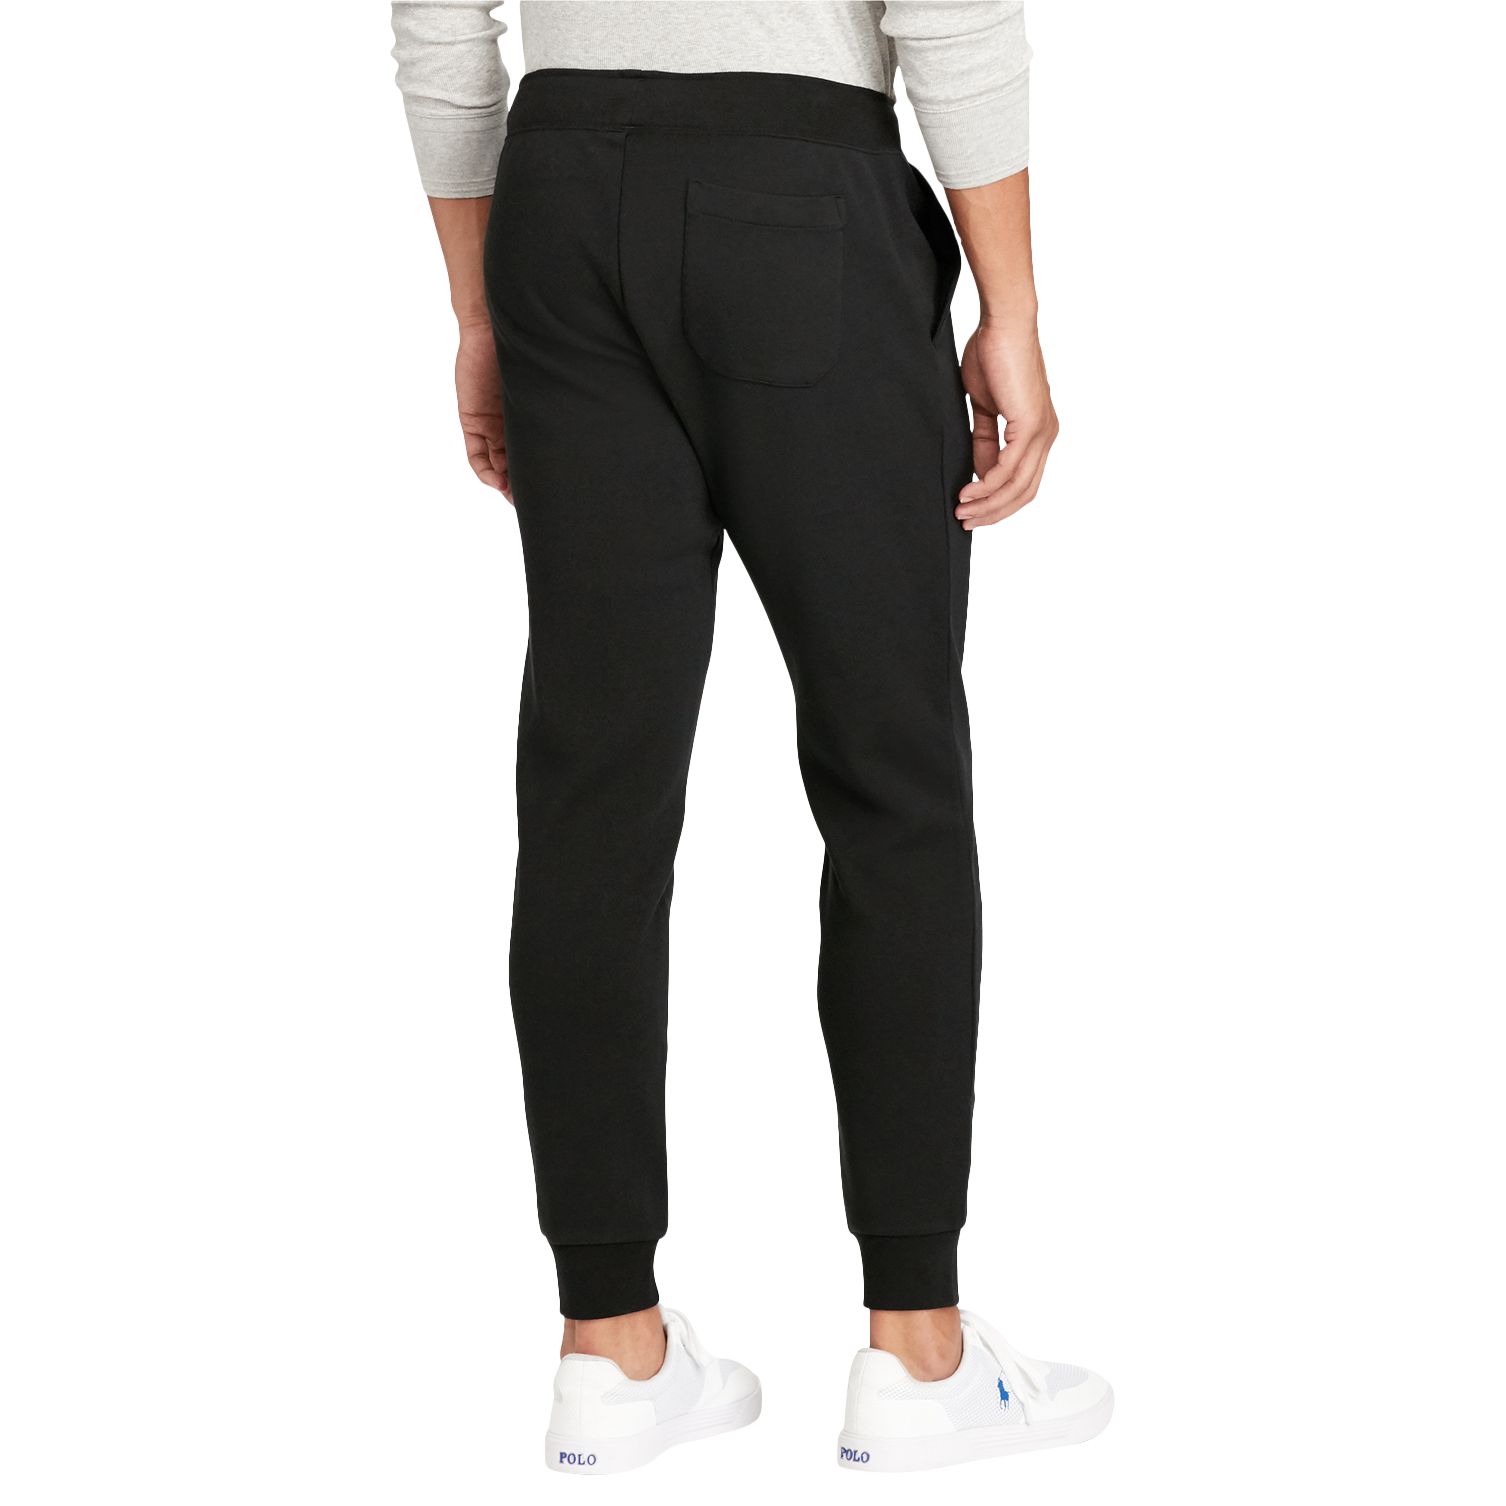 Polo Ralph Lauren Double-Knit Jogging Bottoms, Polo Black, S